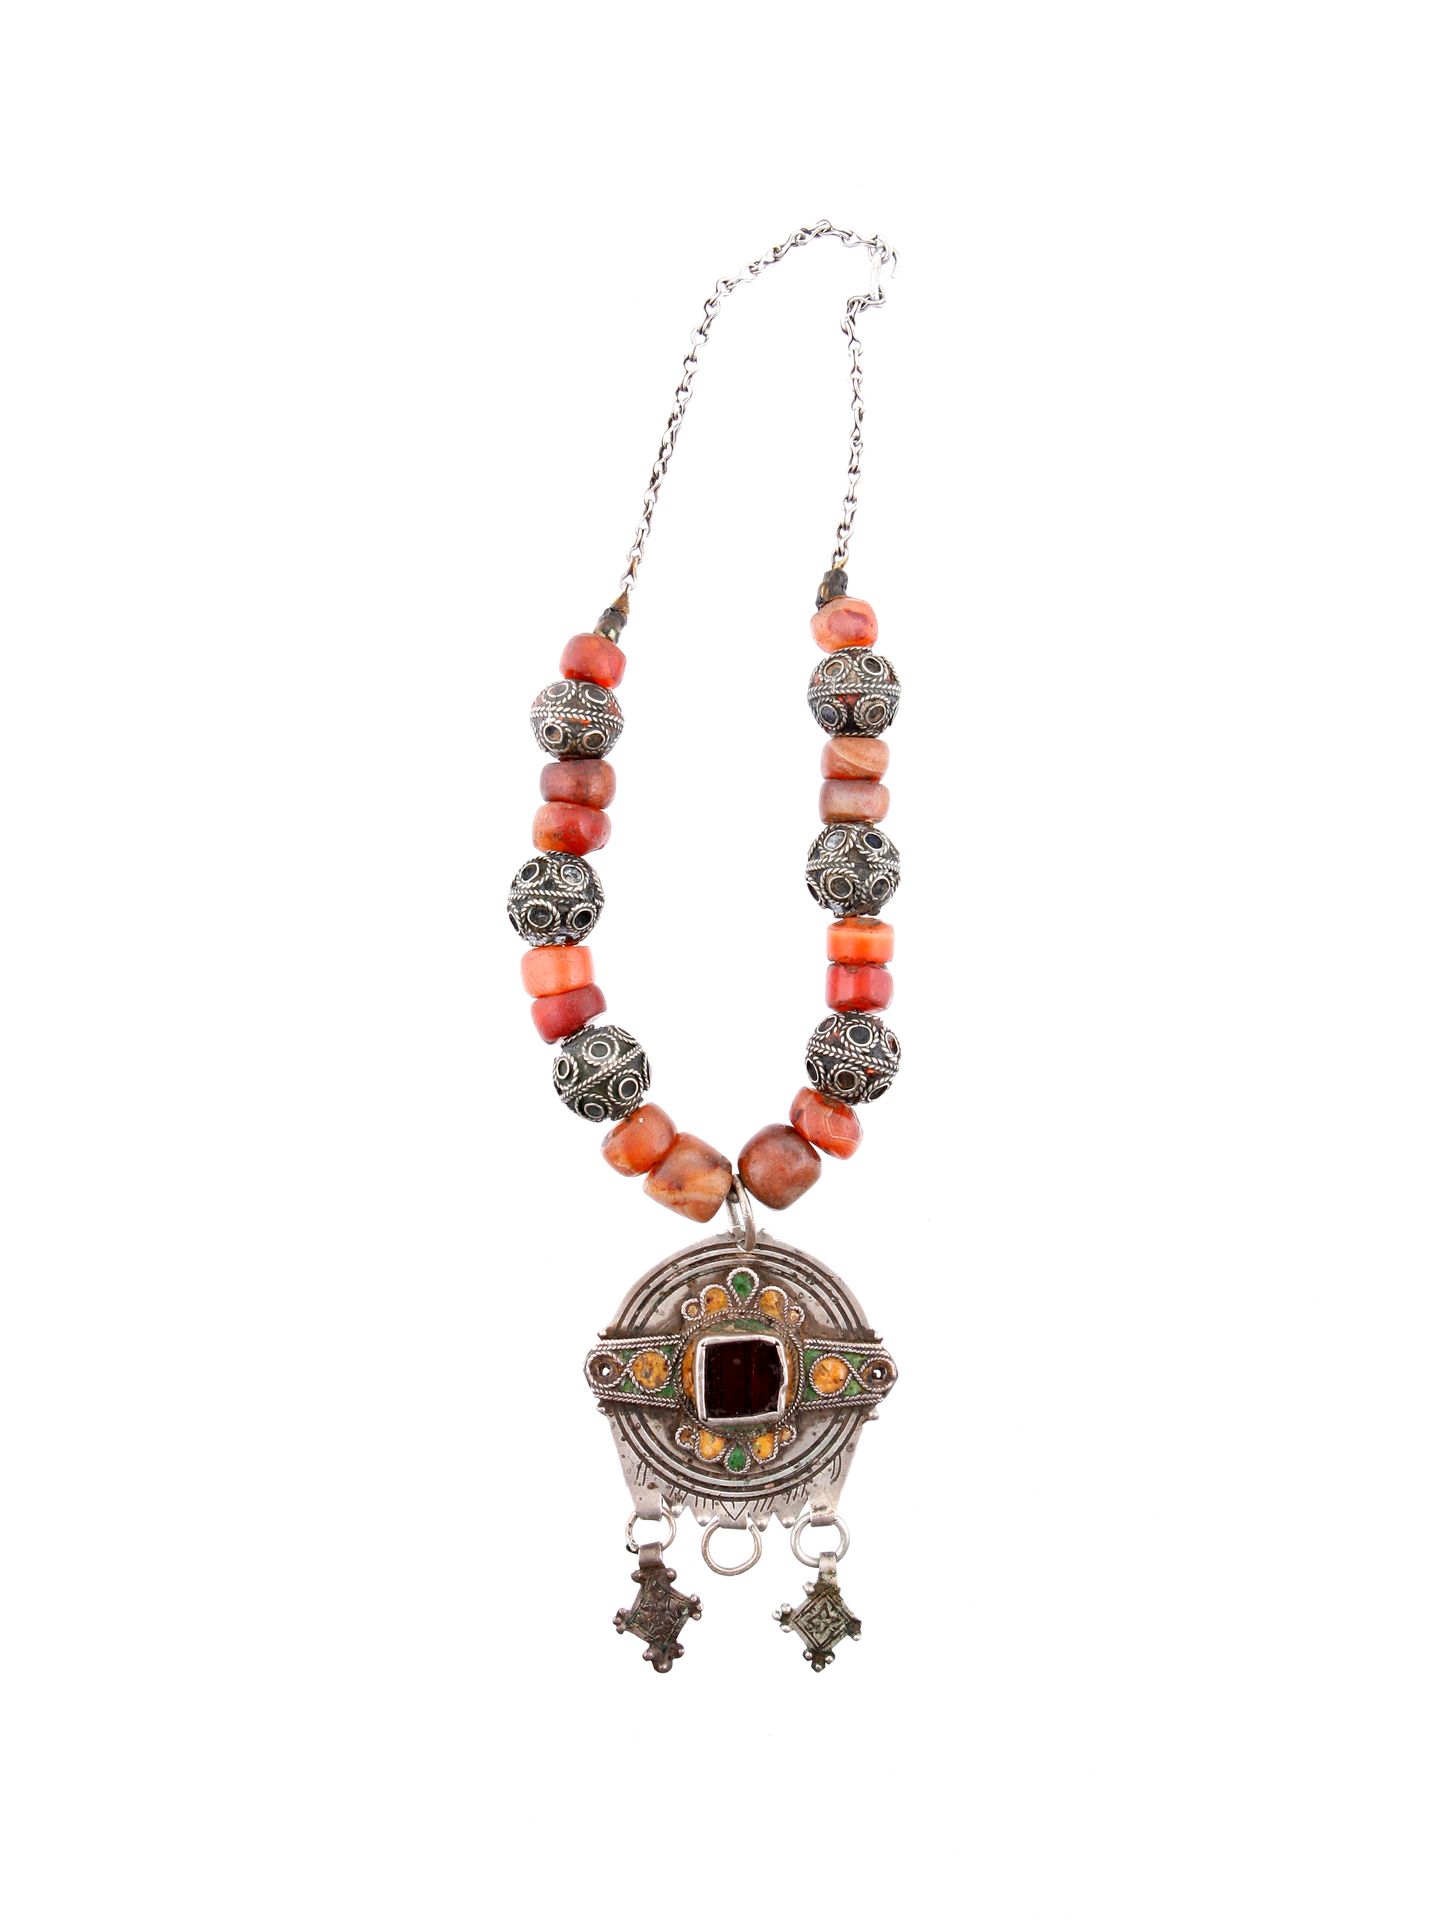 A Berber Necklace with a central Pendant Collier avec pendentif central

Berbère&hellip;